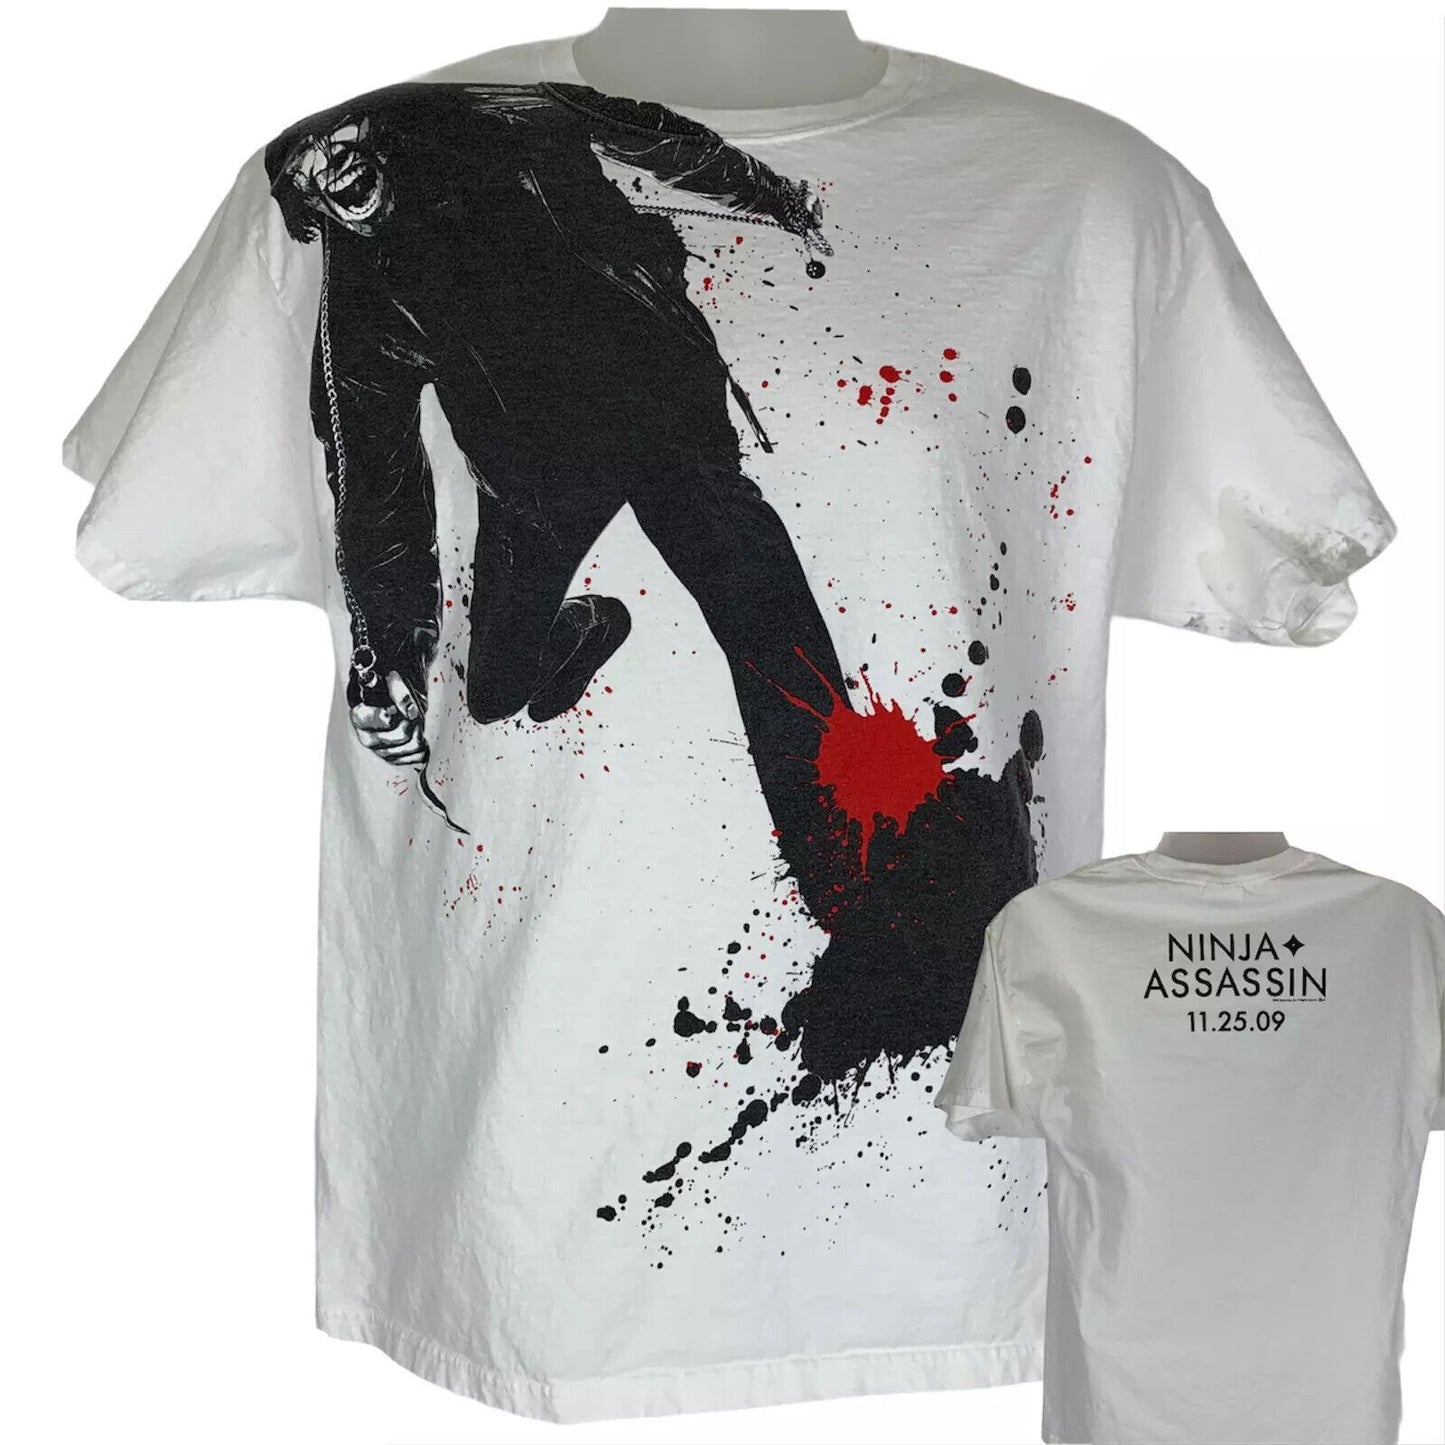 Camiseta Ninja Assassin 2009, película promocional de artes marciales, camiseta de lluvia grande